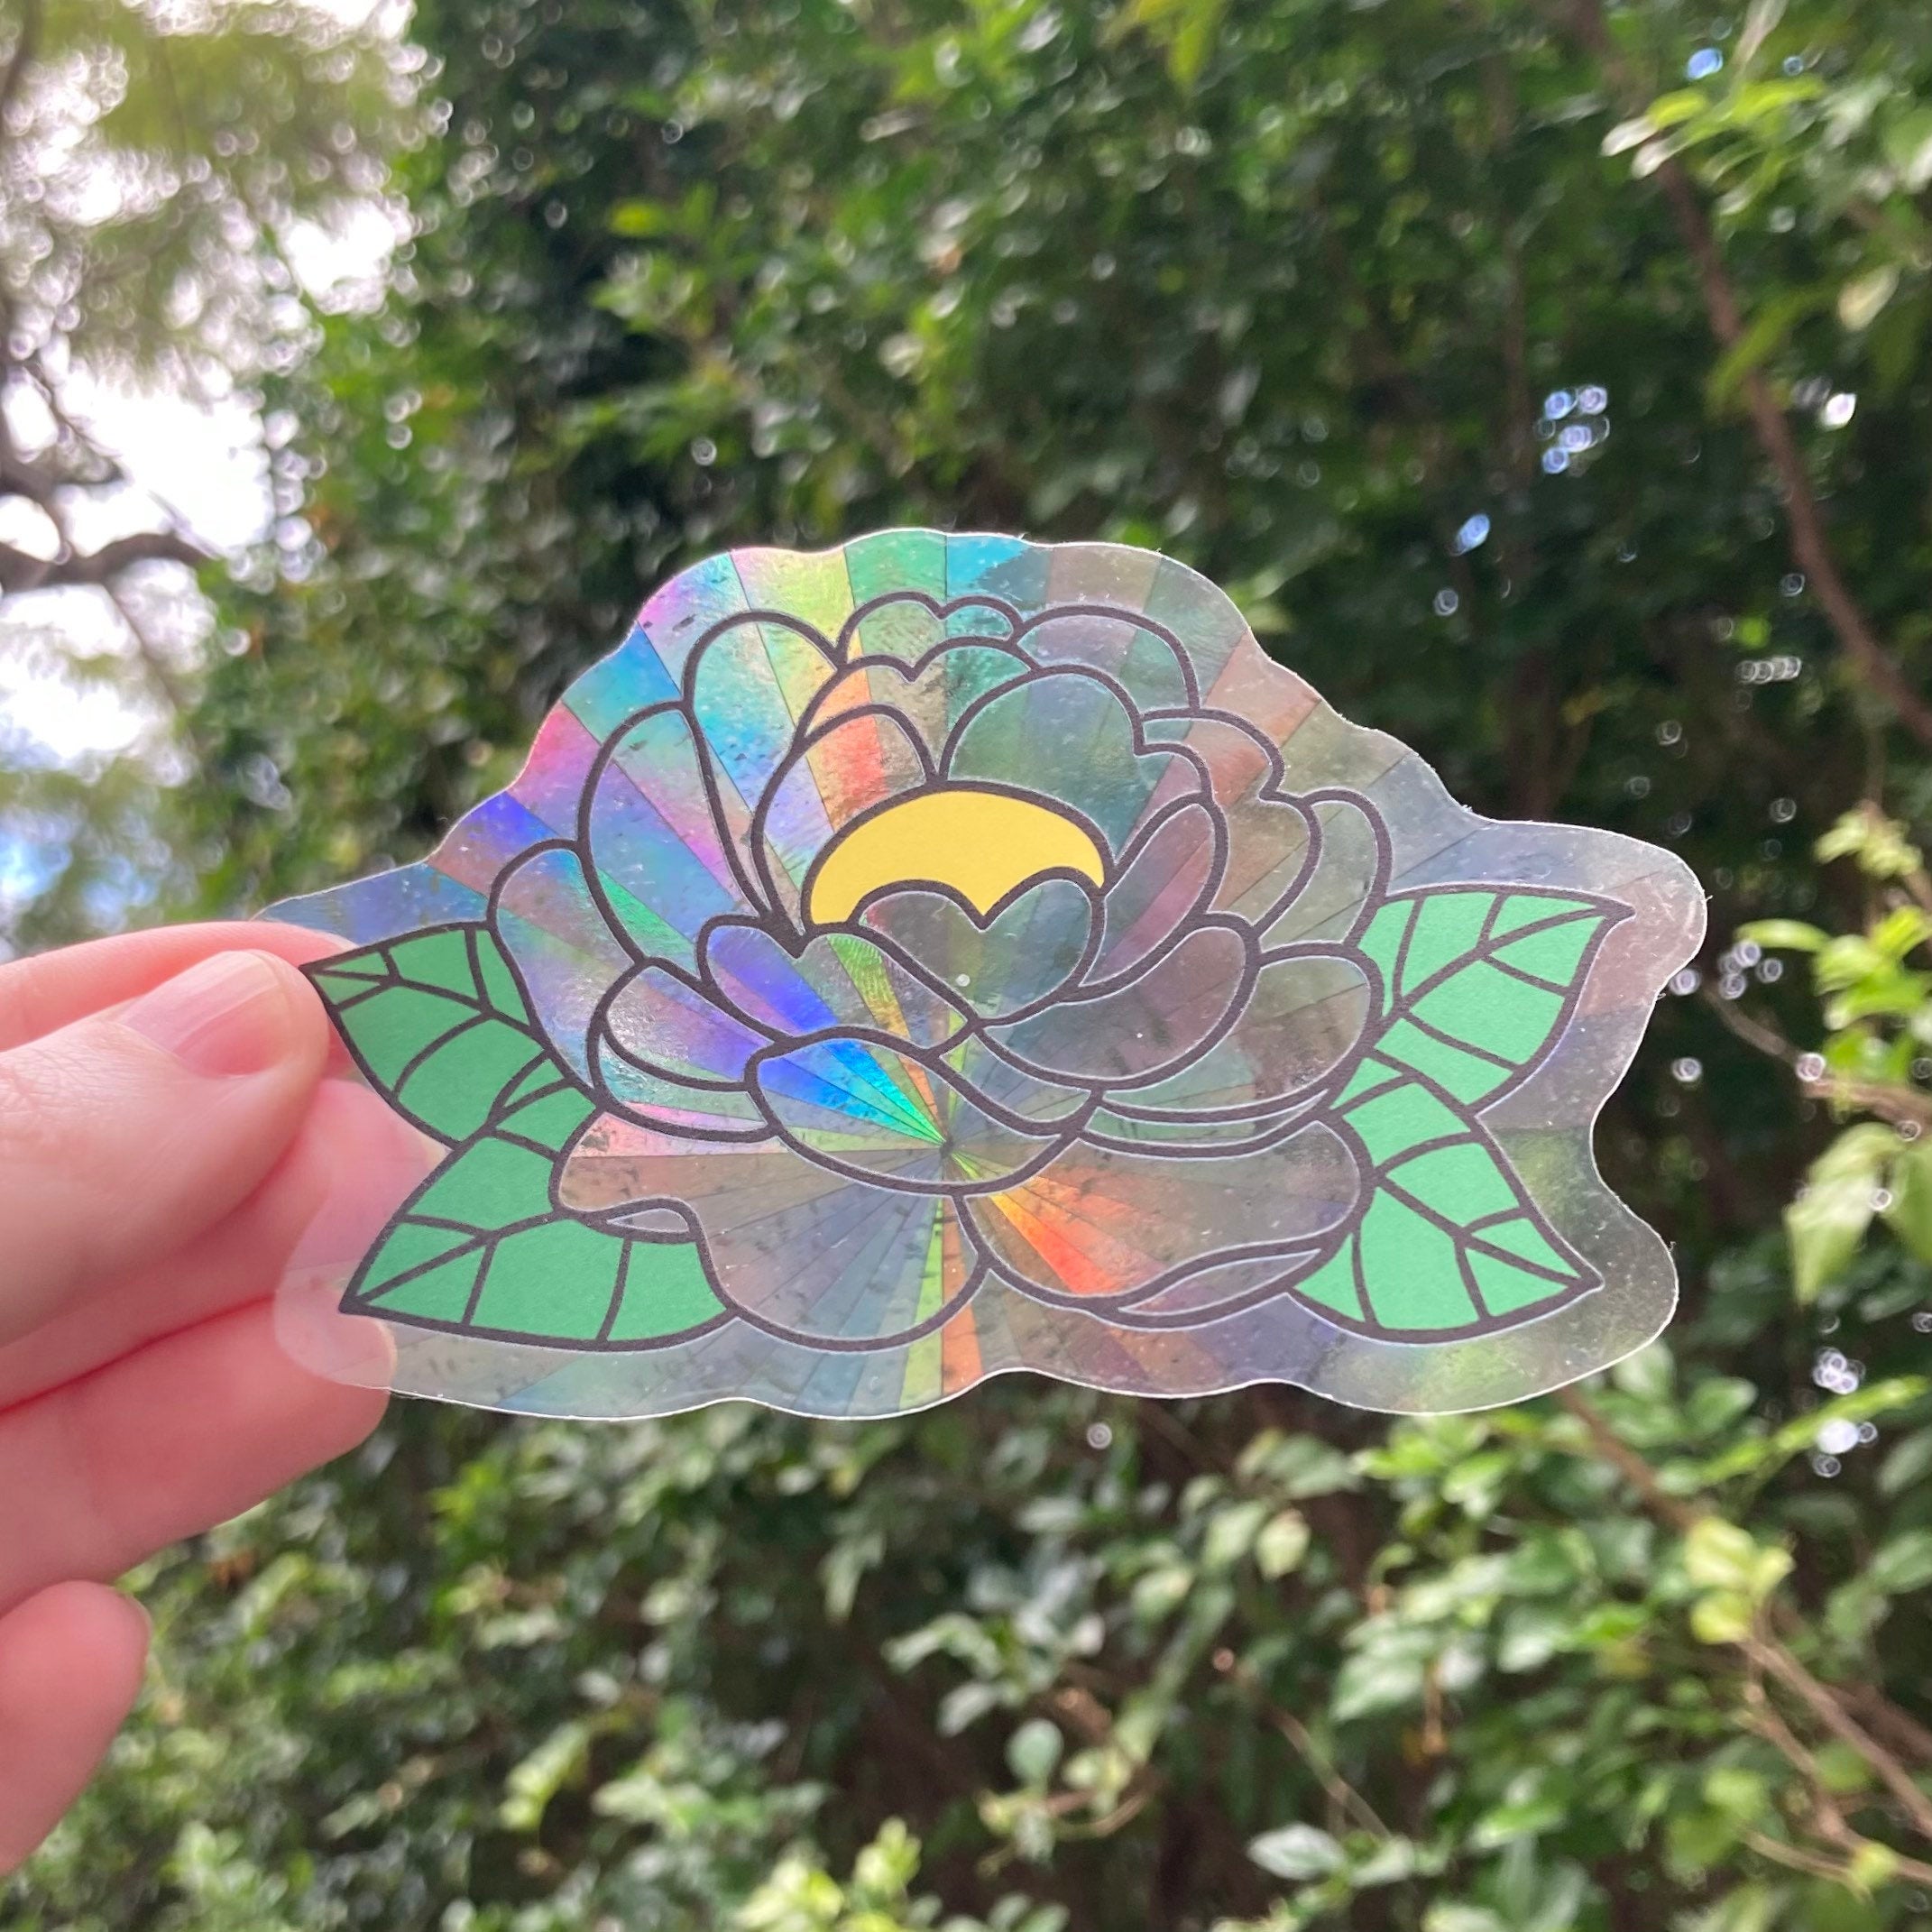 Pretty Flower Prismatic Rainbow Suncatcher Decal Sticker - 4” wide, transparent sun catcher - stained glass window effect